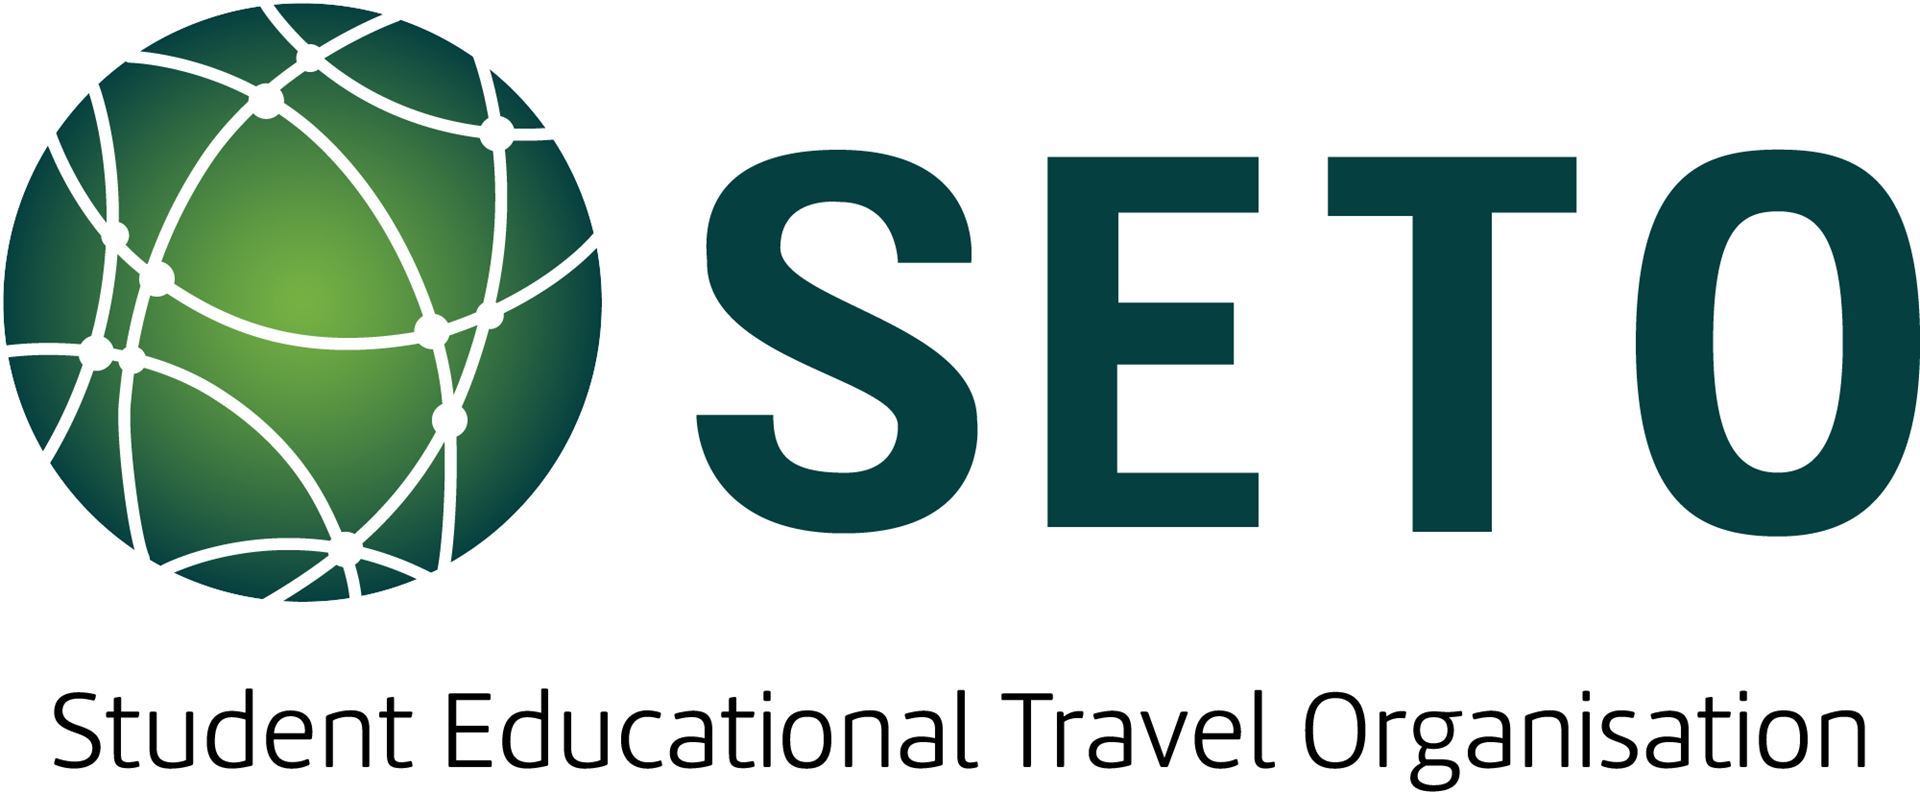 Student Education Travel Organisation